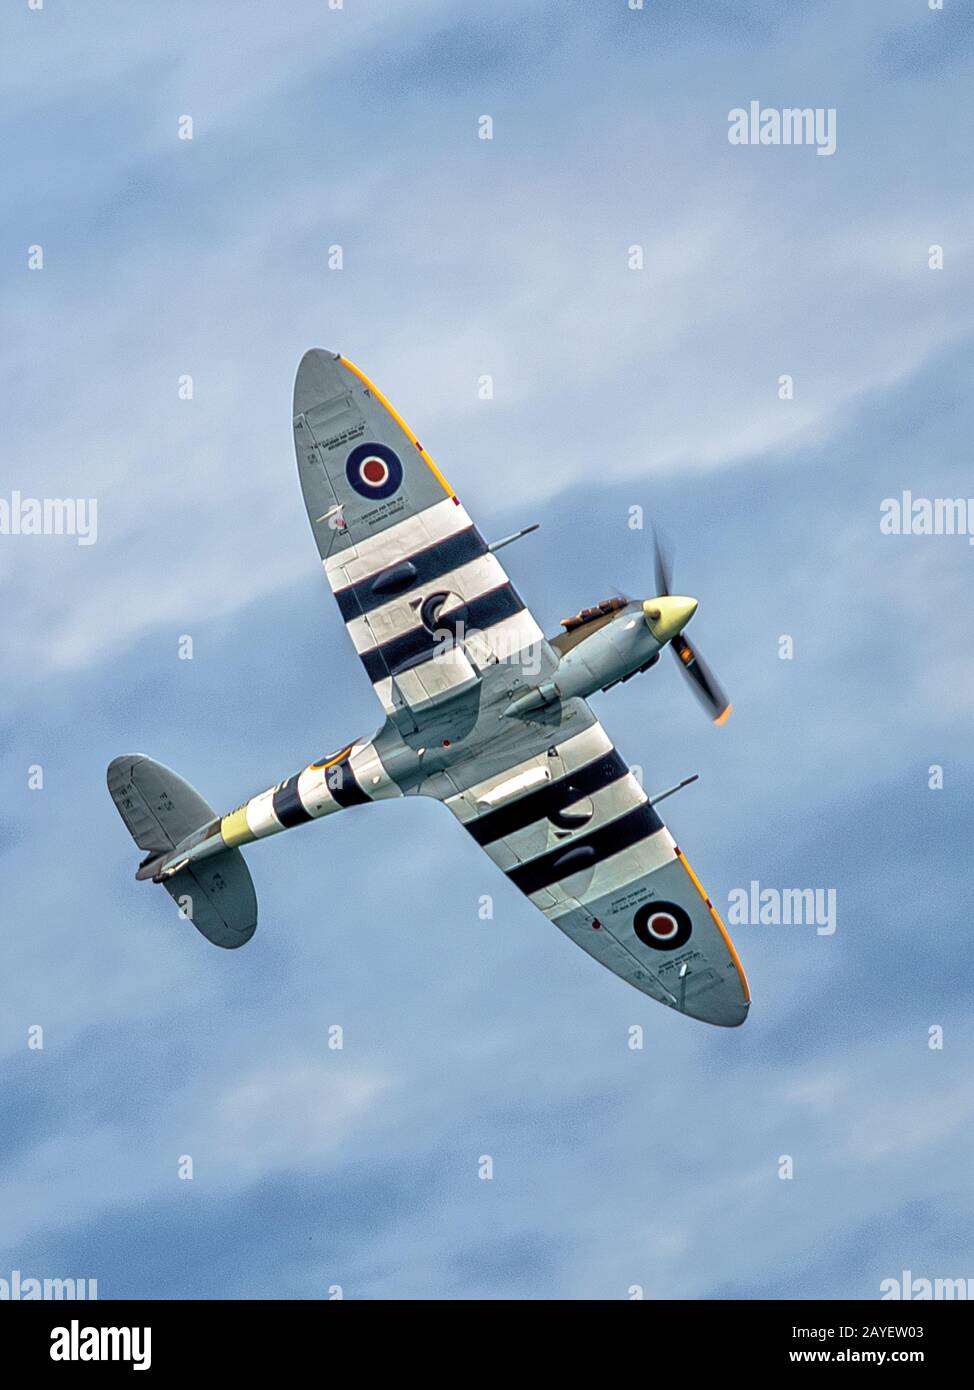 Spitfire Mk Vb of RAF battle of Britain Memorial Flight Stock Photo